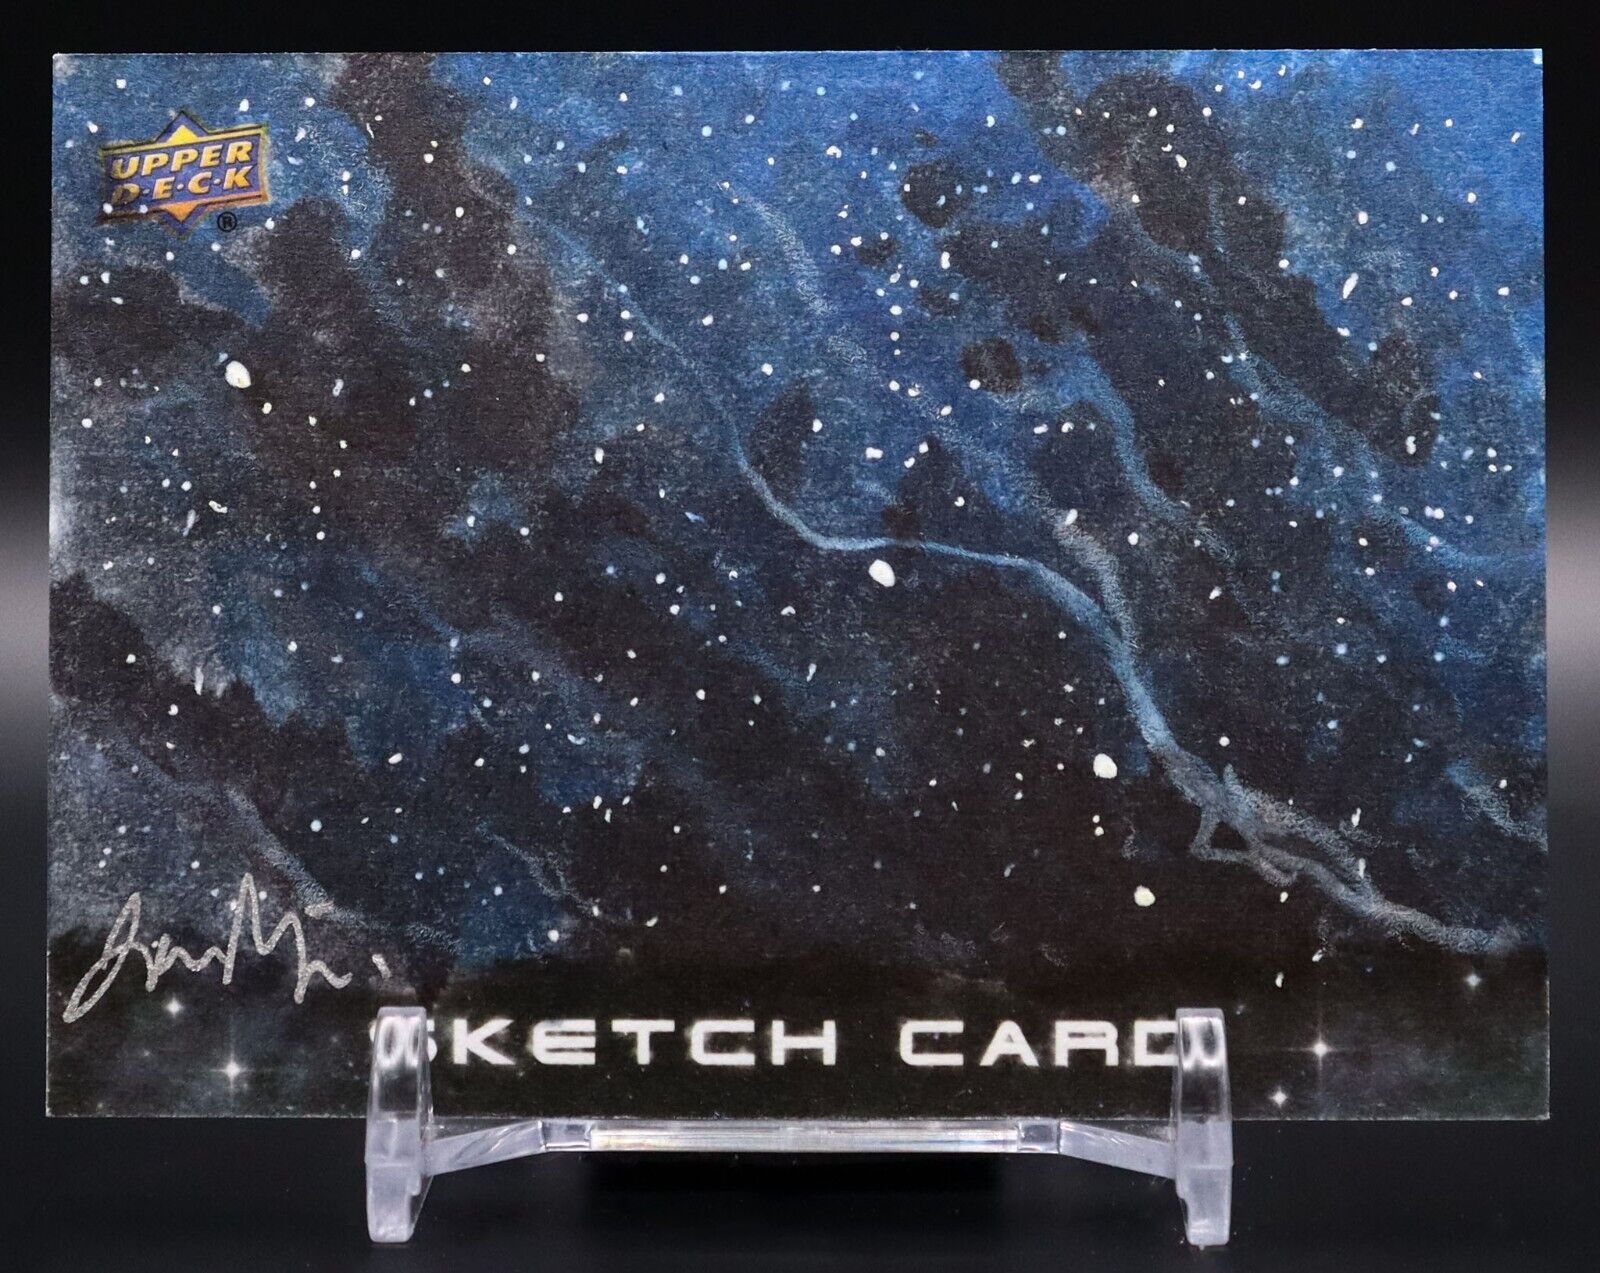 Upper Deck Cosmic Sketch Card Jon Mangini 1/1